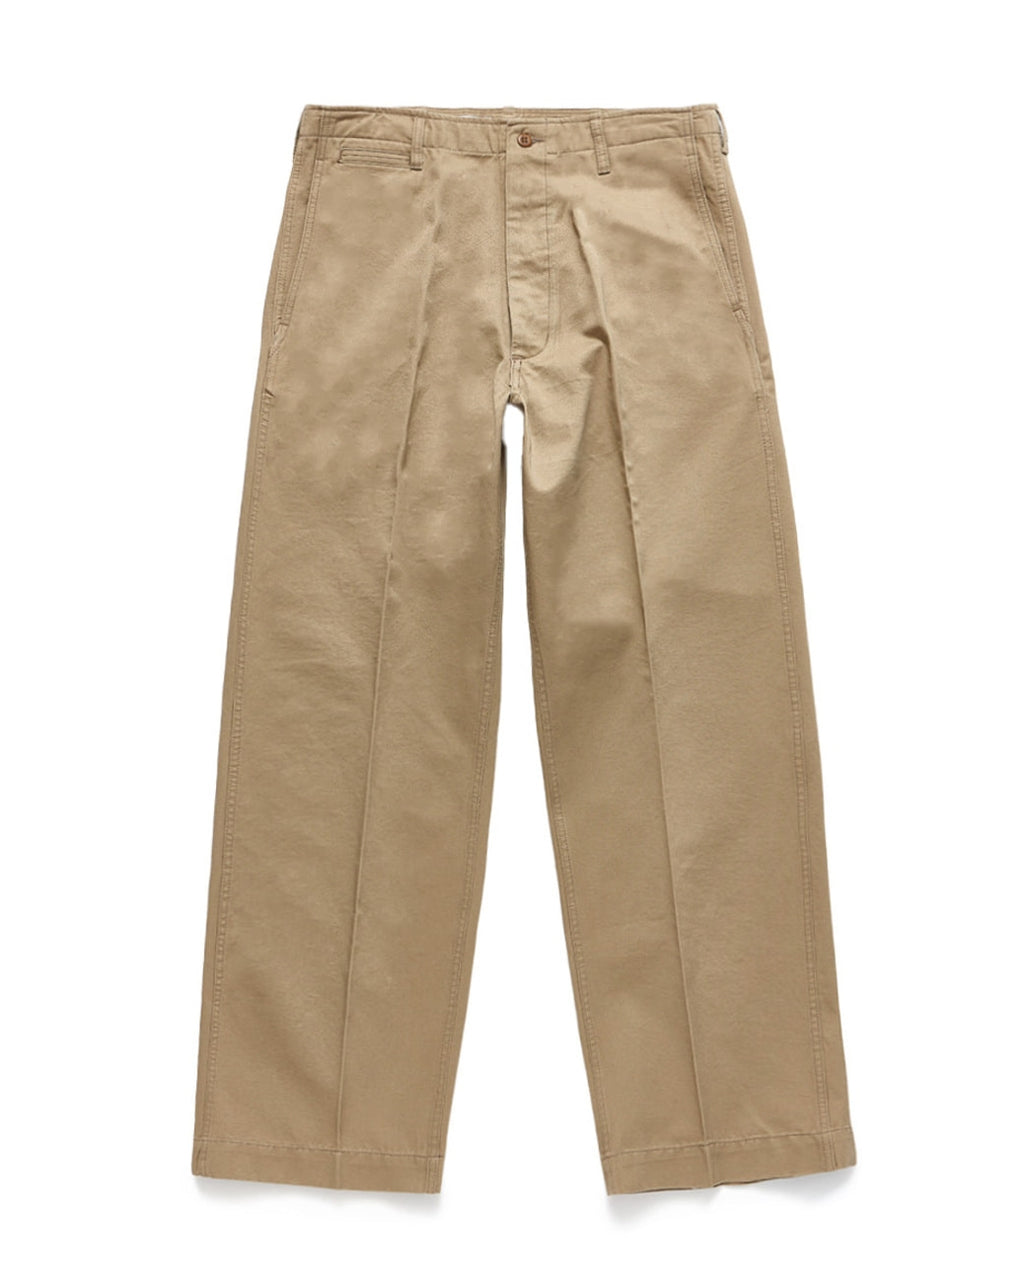 Eastlogue Khaki Chino Pleated Pants